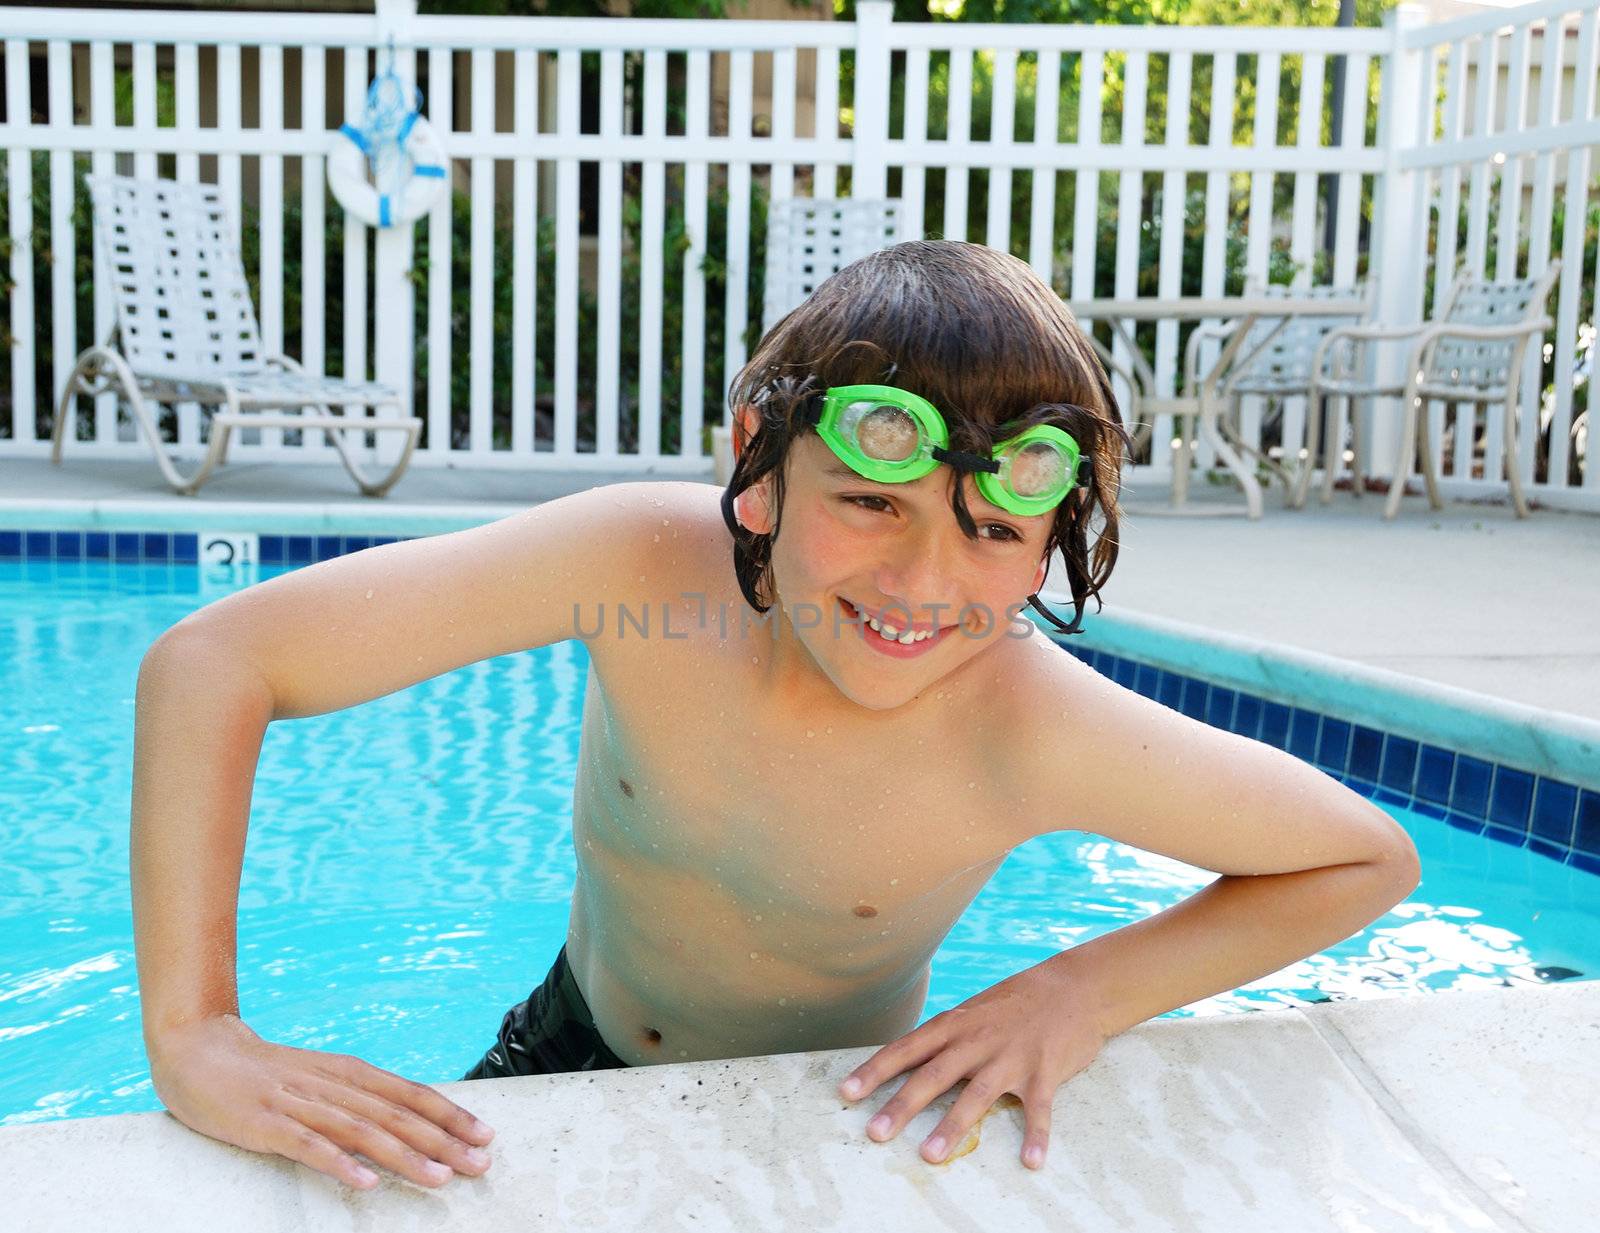 Teen boy with swimming goggles enjoying the pool.